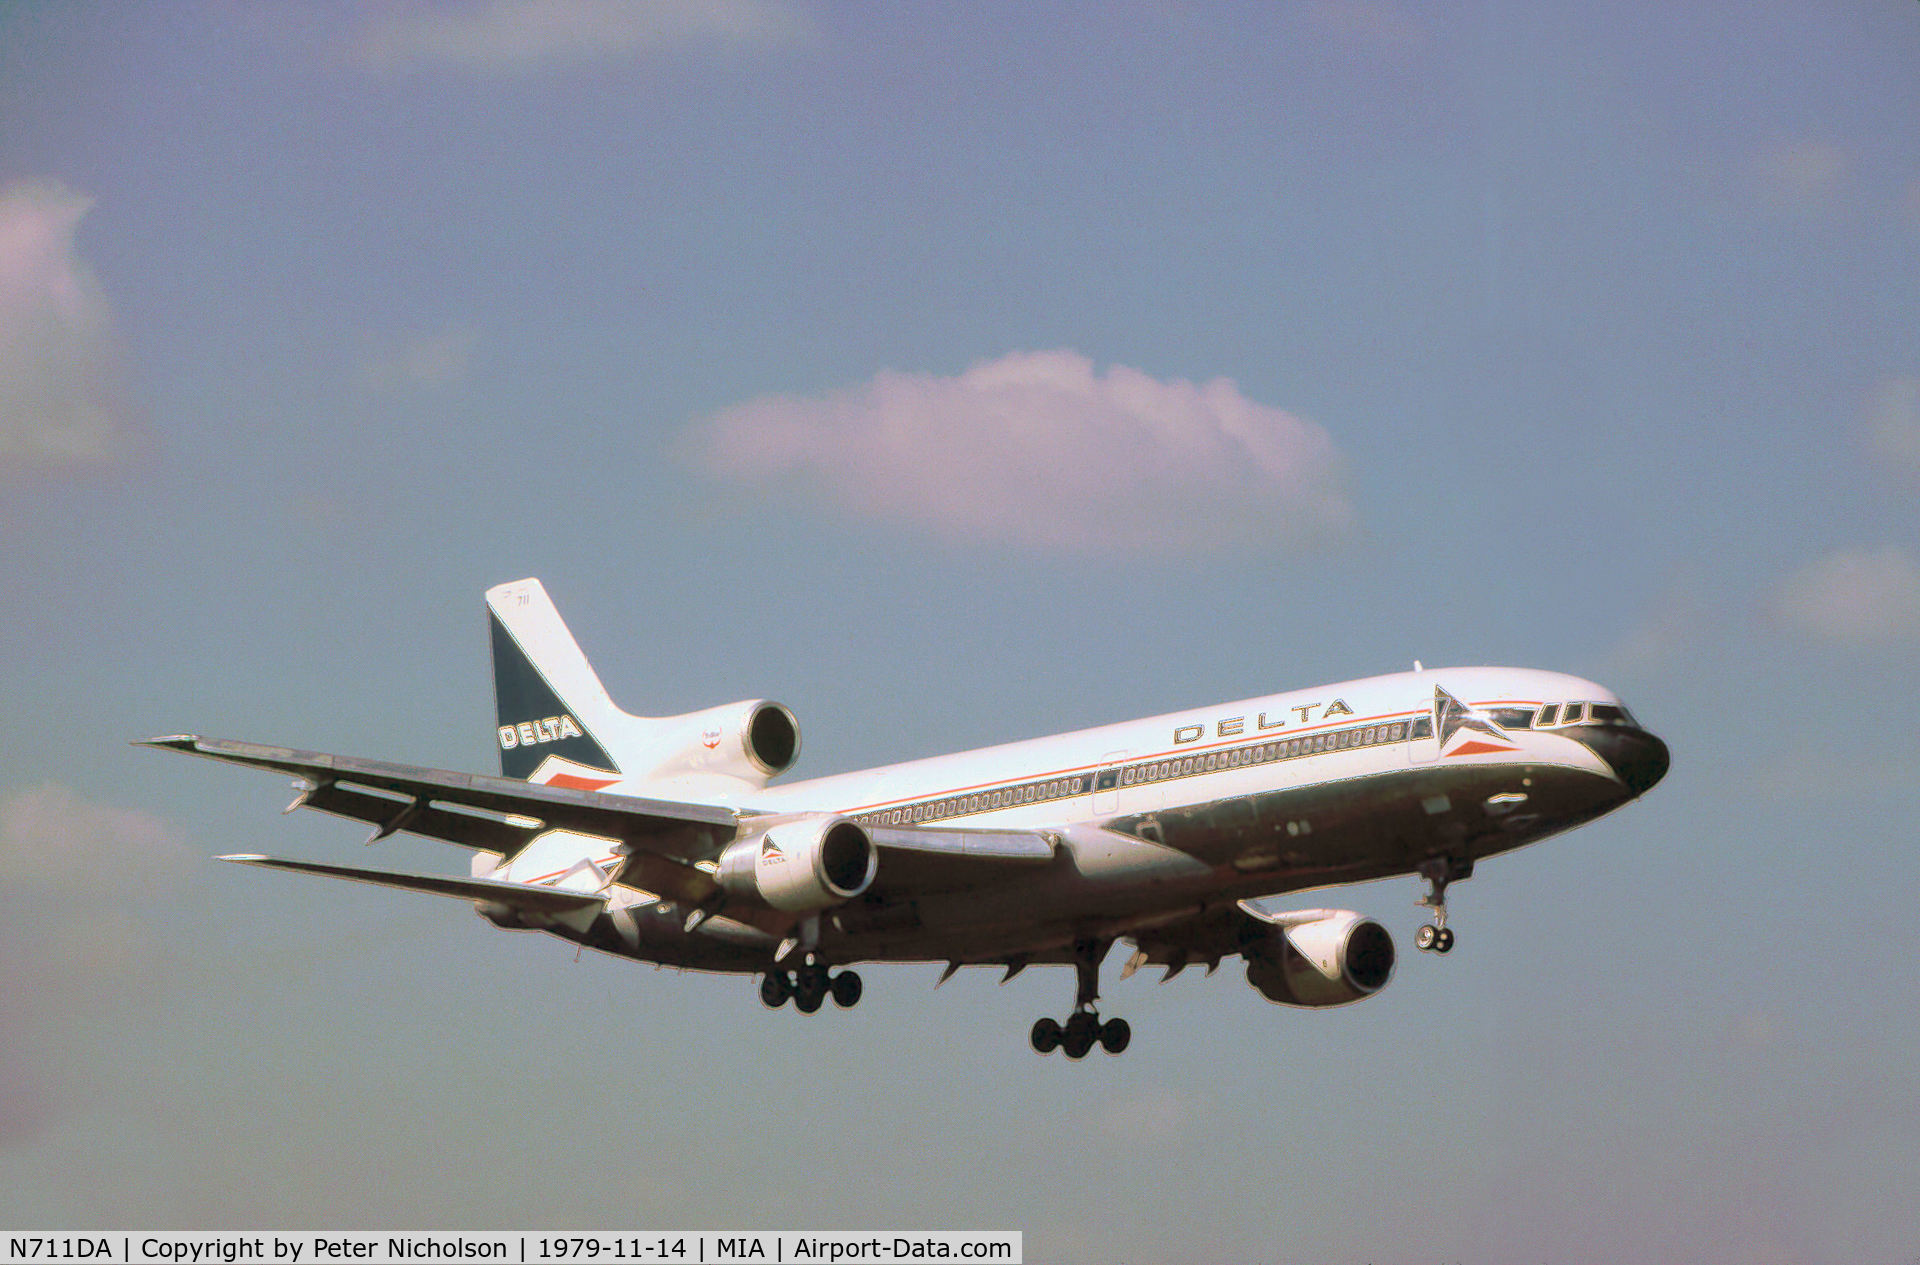 N711DA, 1974 Lockheed L-1011-385-1 TriStar 50 C/N 193C-1086, Lockheed L-1011 TriStar of Delta Air Lines on final approach to Miami International in November 1979.